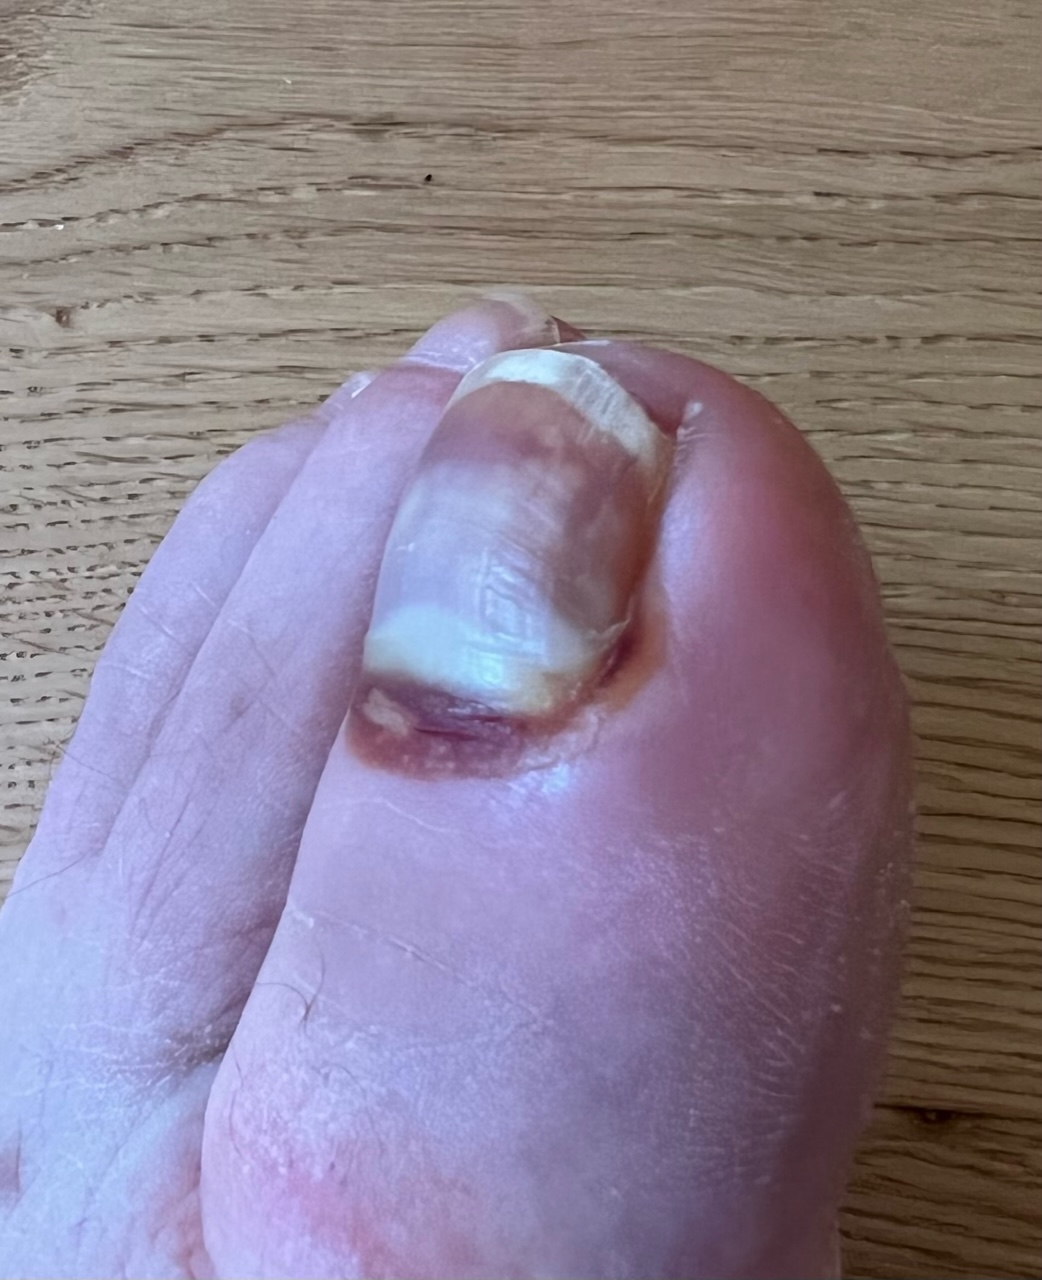 Big toe showing bruising